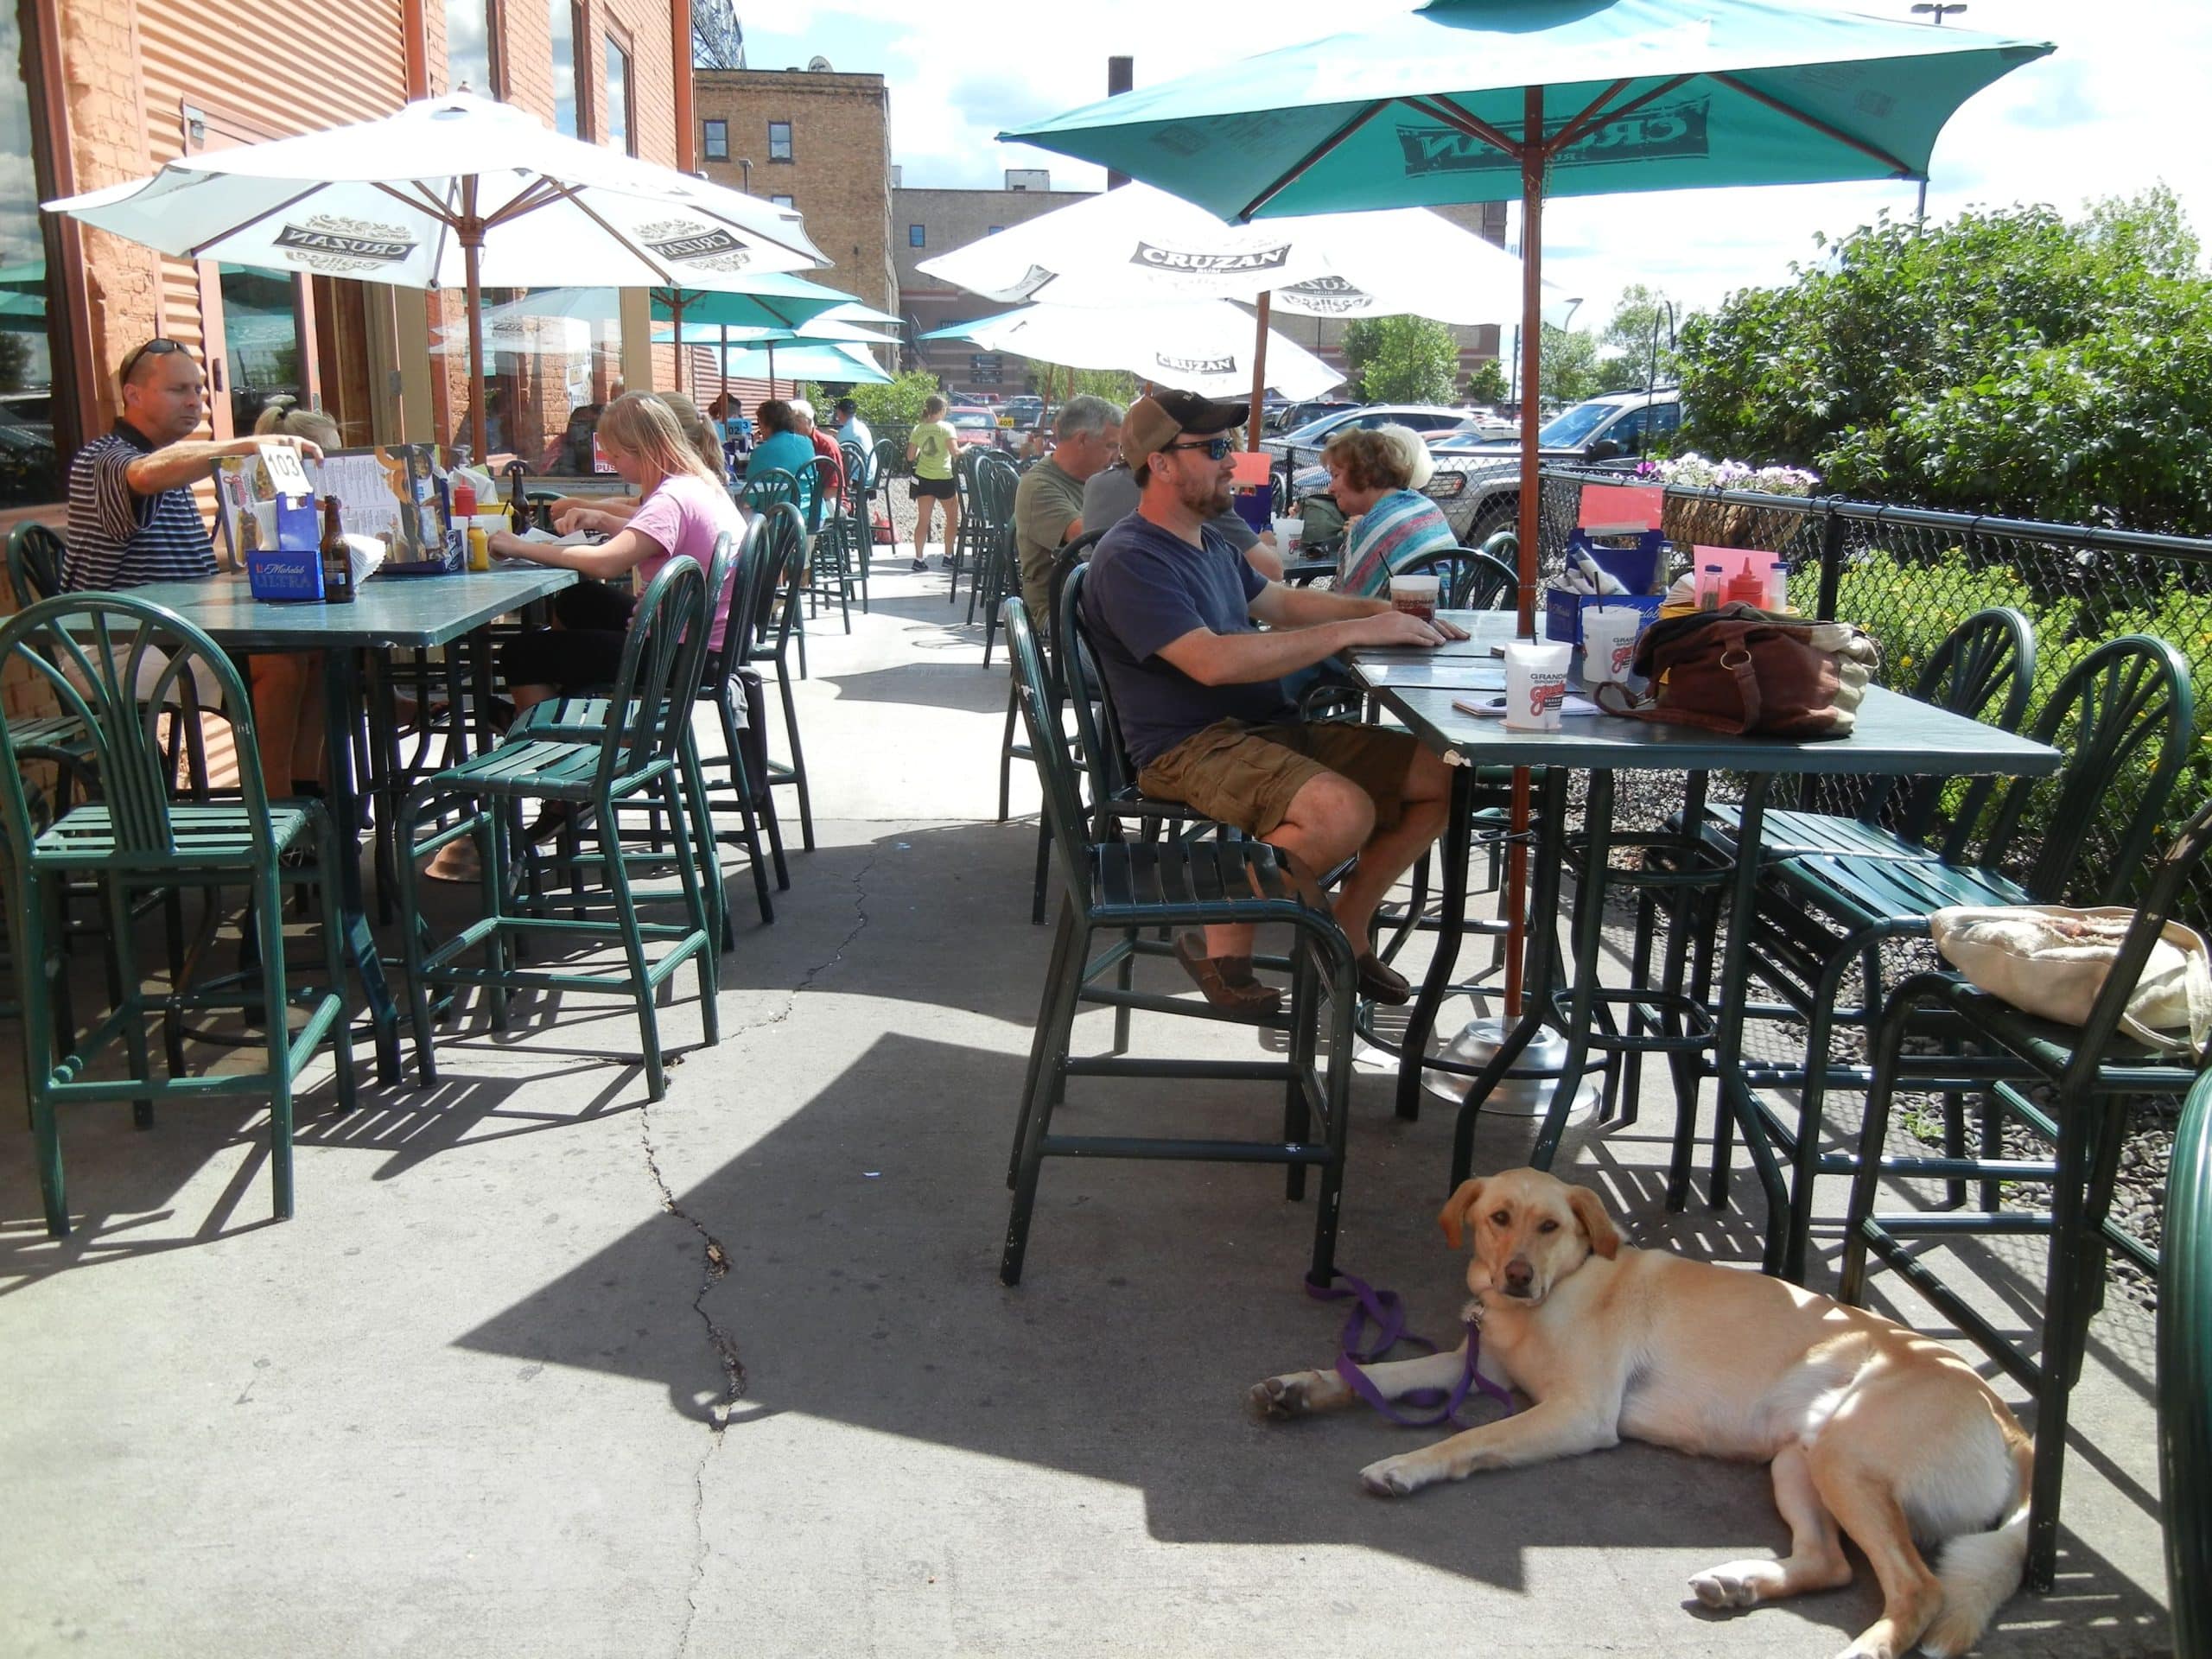 A dog joins a customer at an outdoor restaurant.